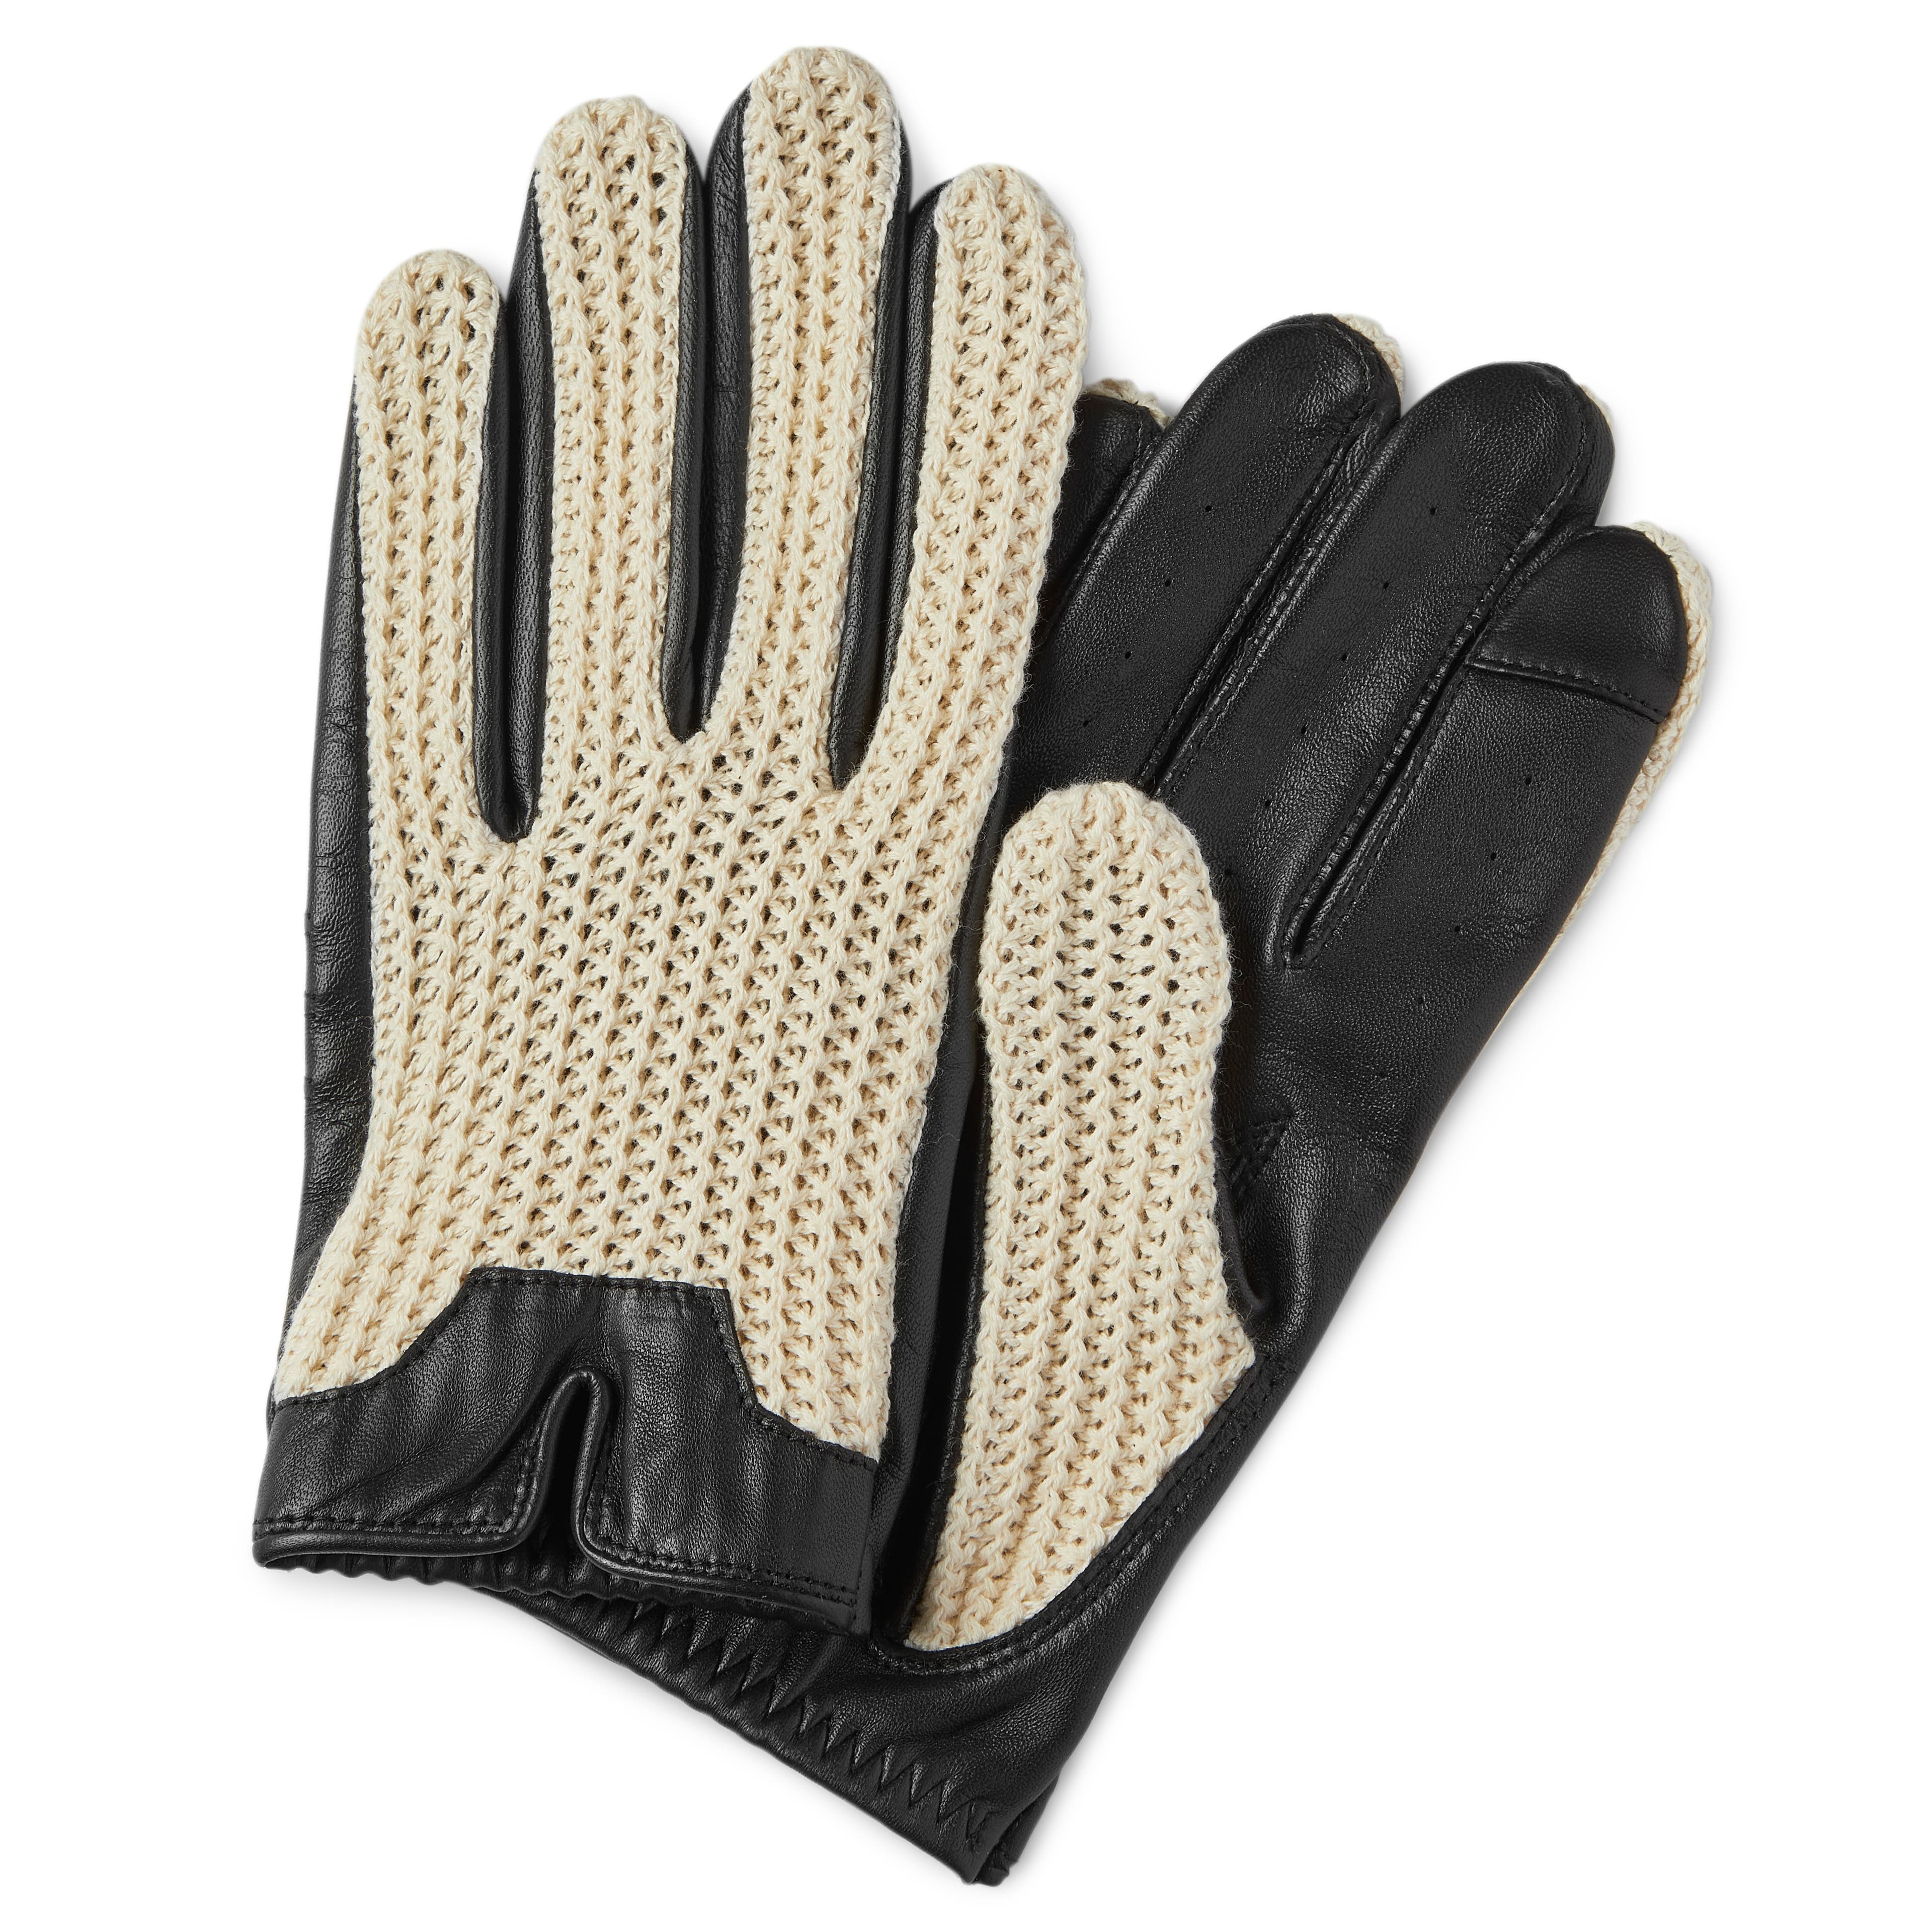 Black & Ivory Sheepskin Leather Touchscreen Driving Gloves